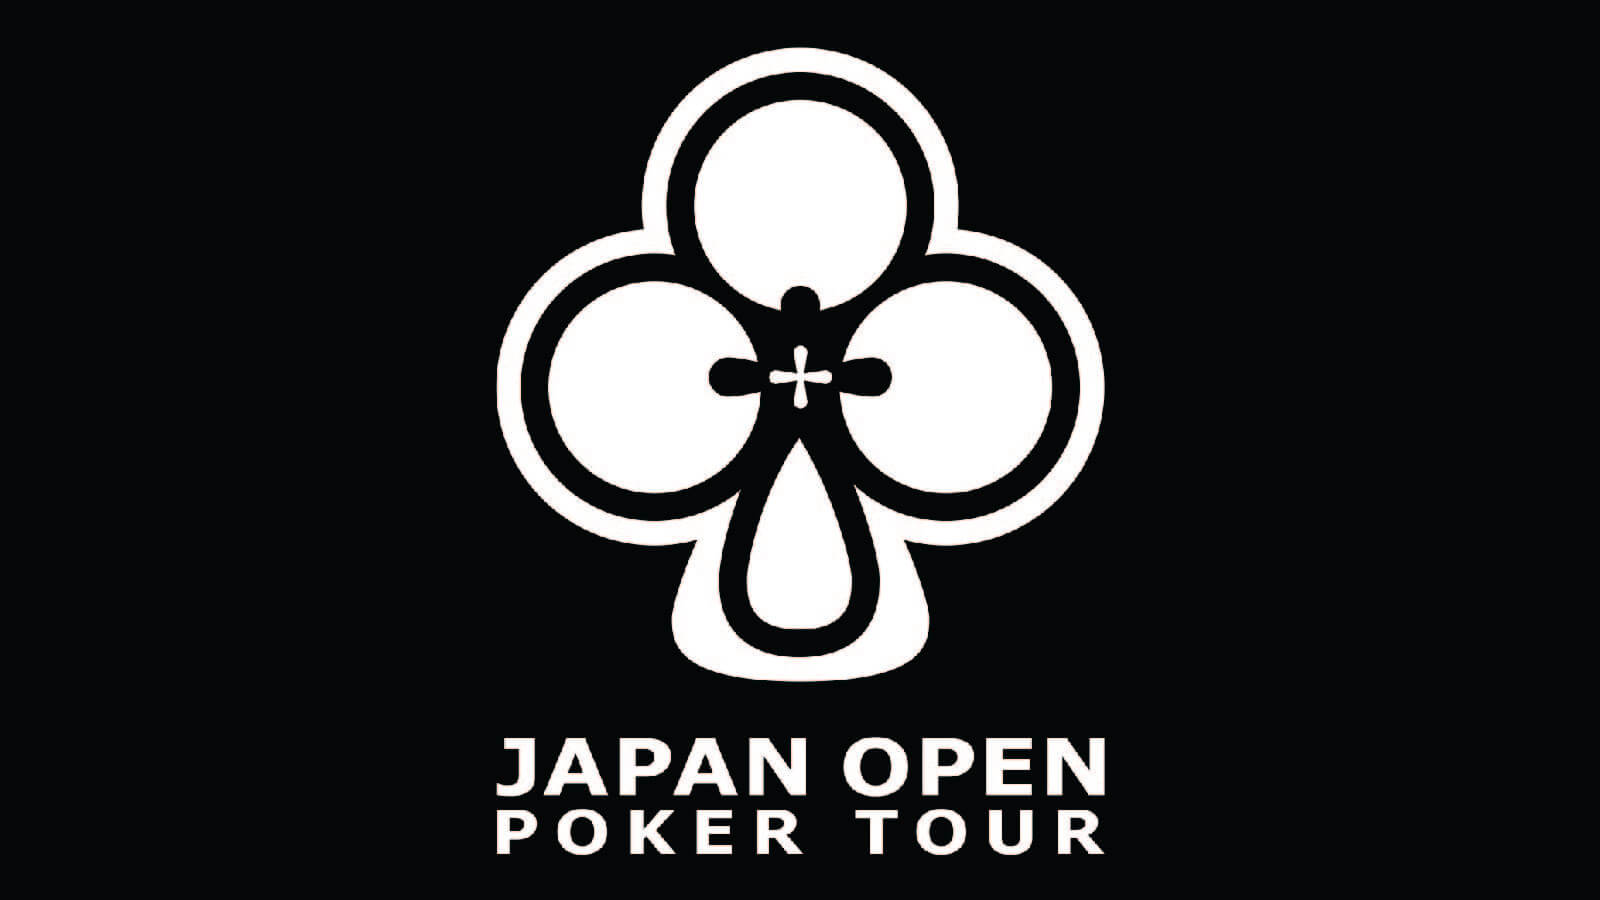 JAPAN OPEN POKER TOUR